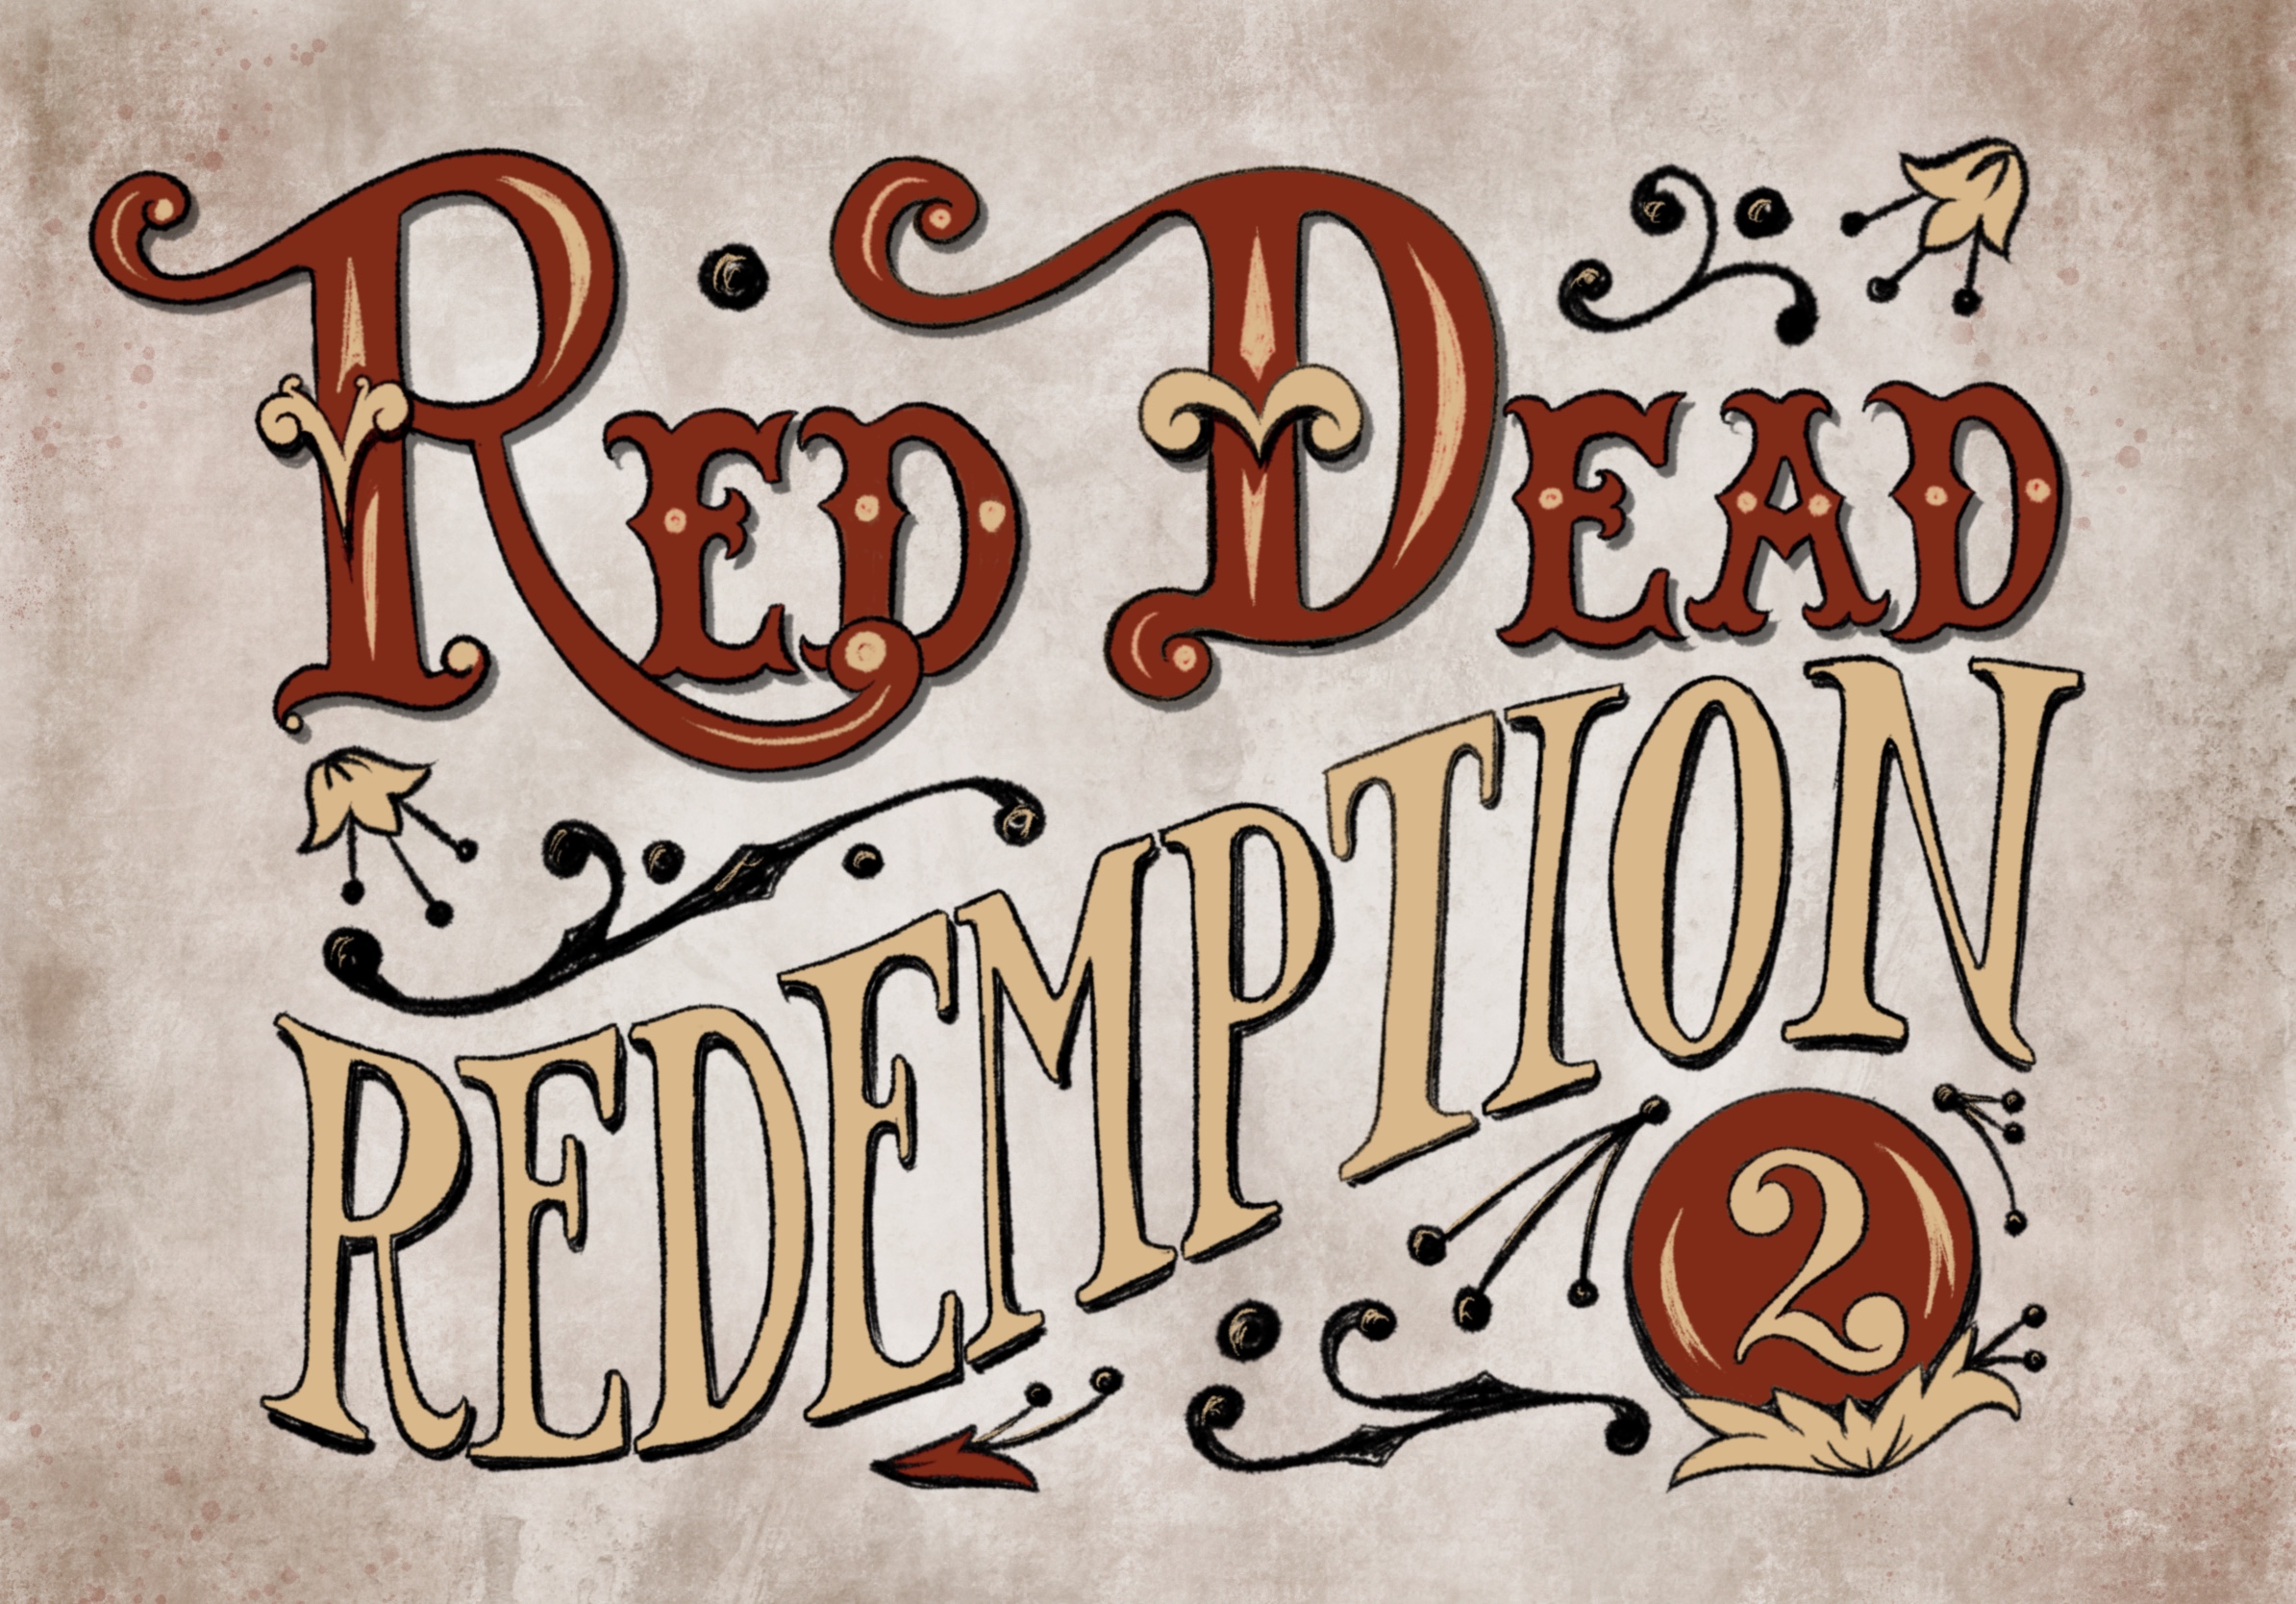 Red Dead Redemption 2 Handlettering